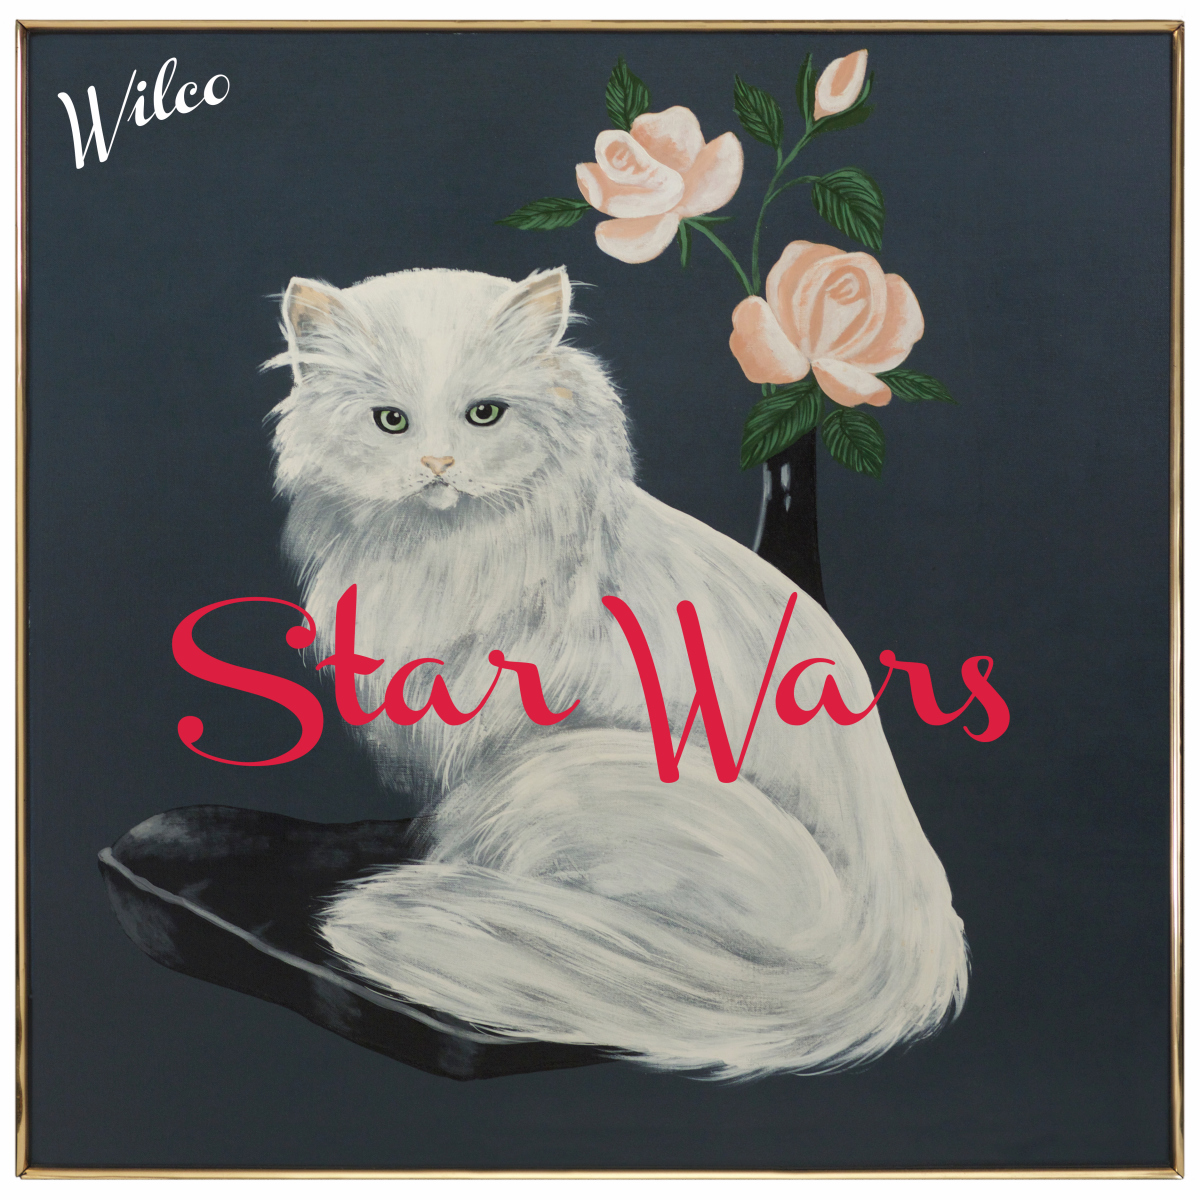 Wilco - Star Wars - CD